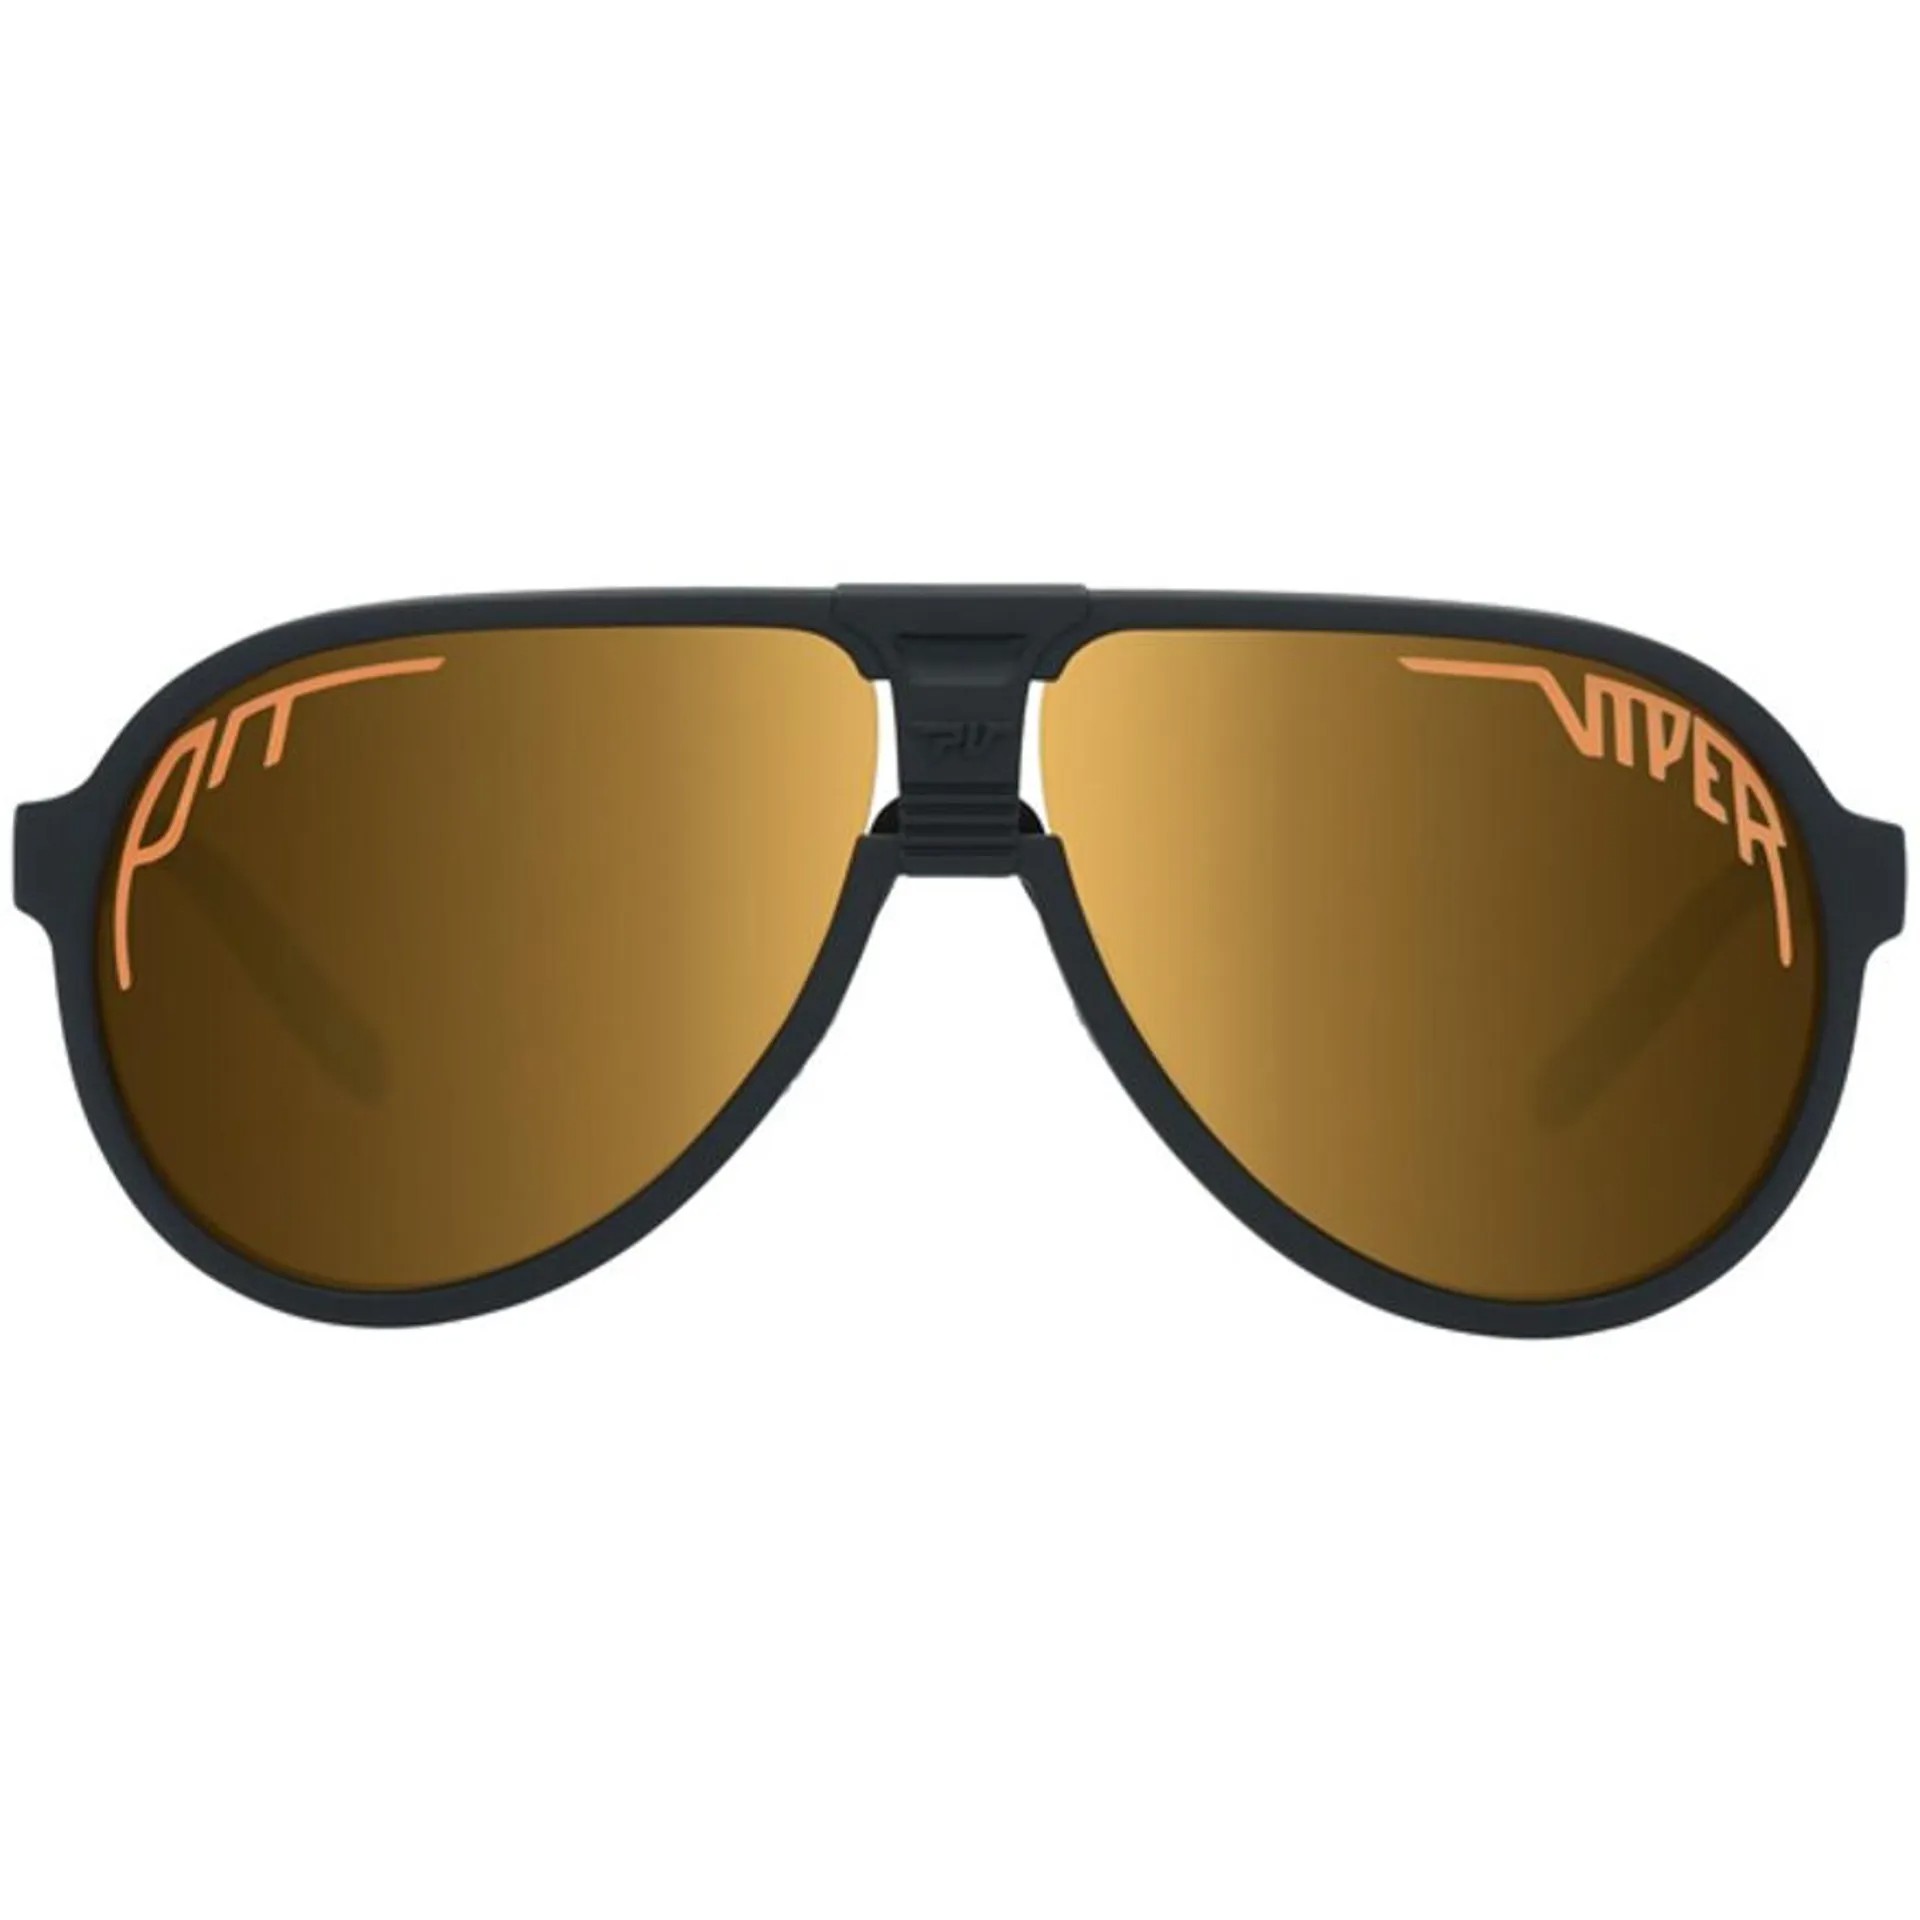 Pit Viper The Jethawk Sunglasses